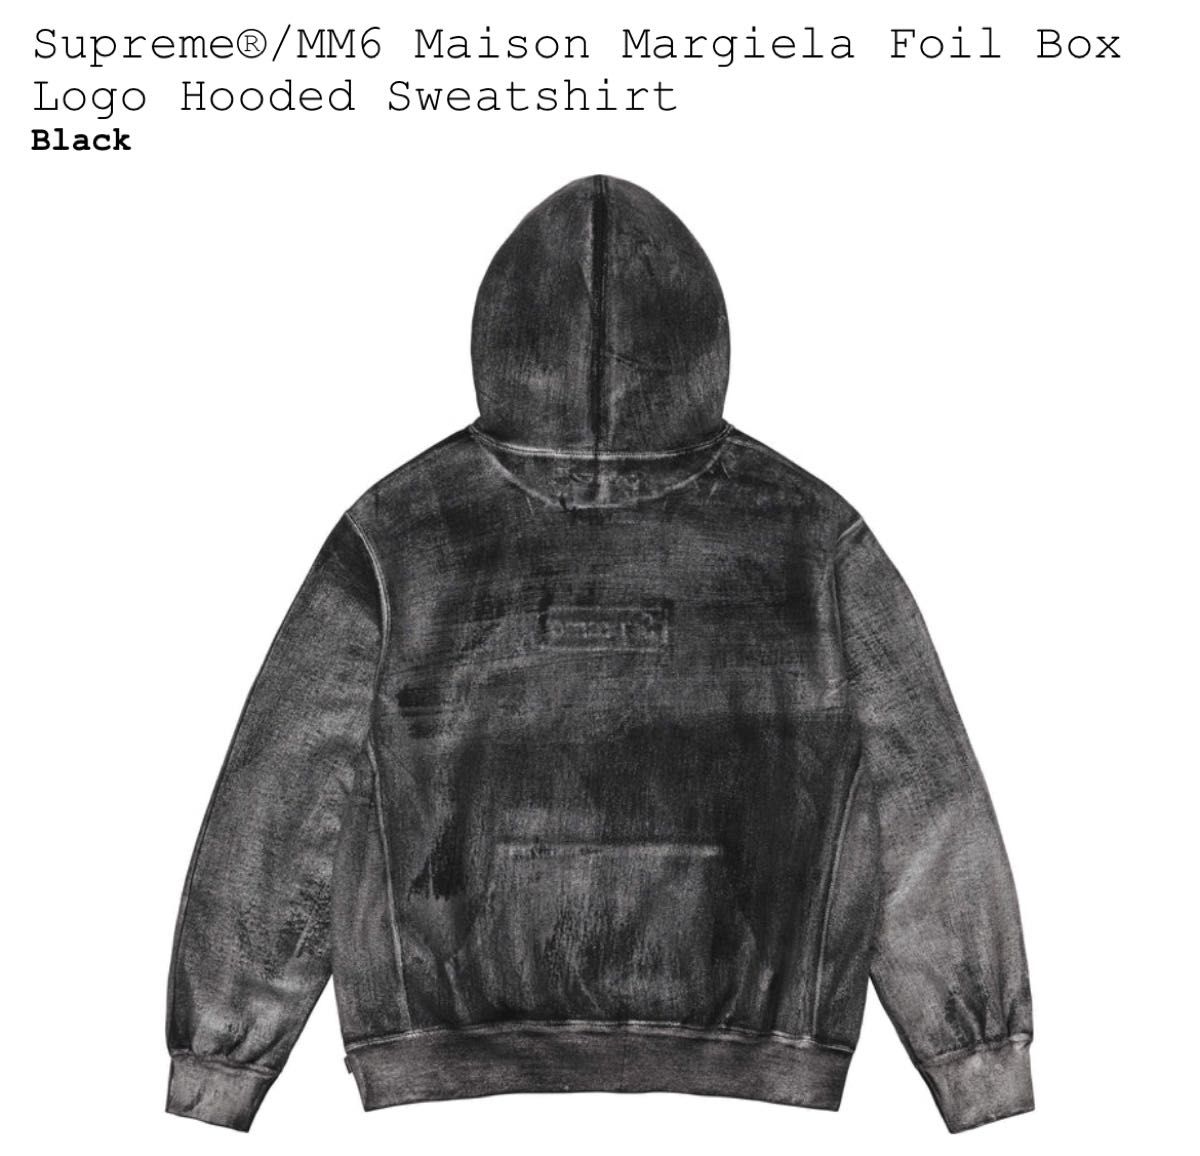 Supreme MM6 Maison Margiela Foil Box Logo Hooded Sweatshirt